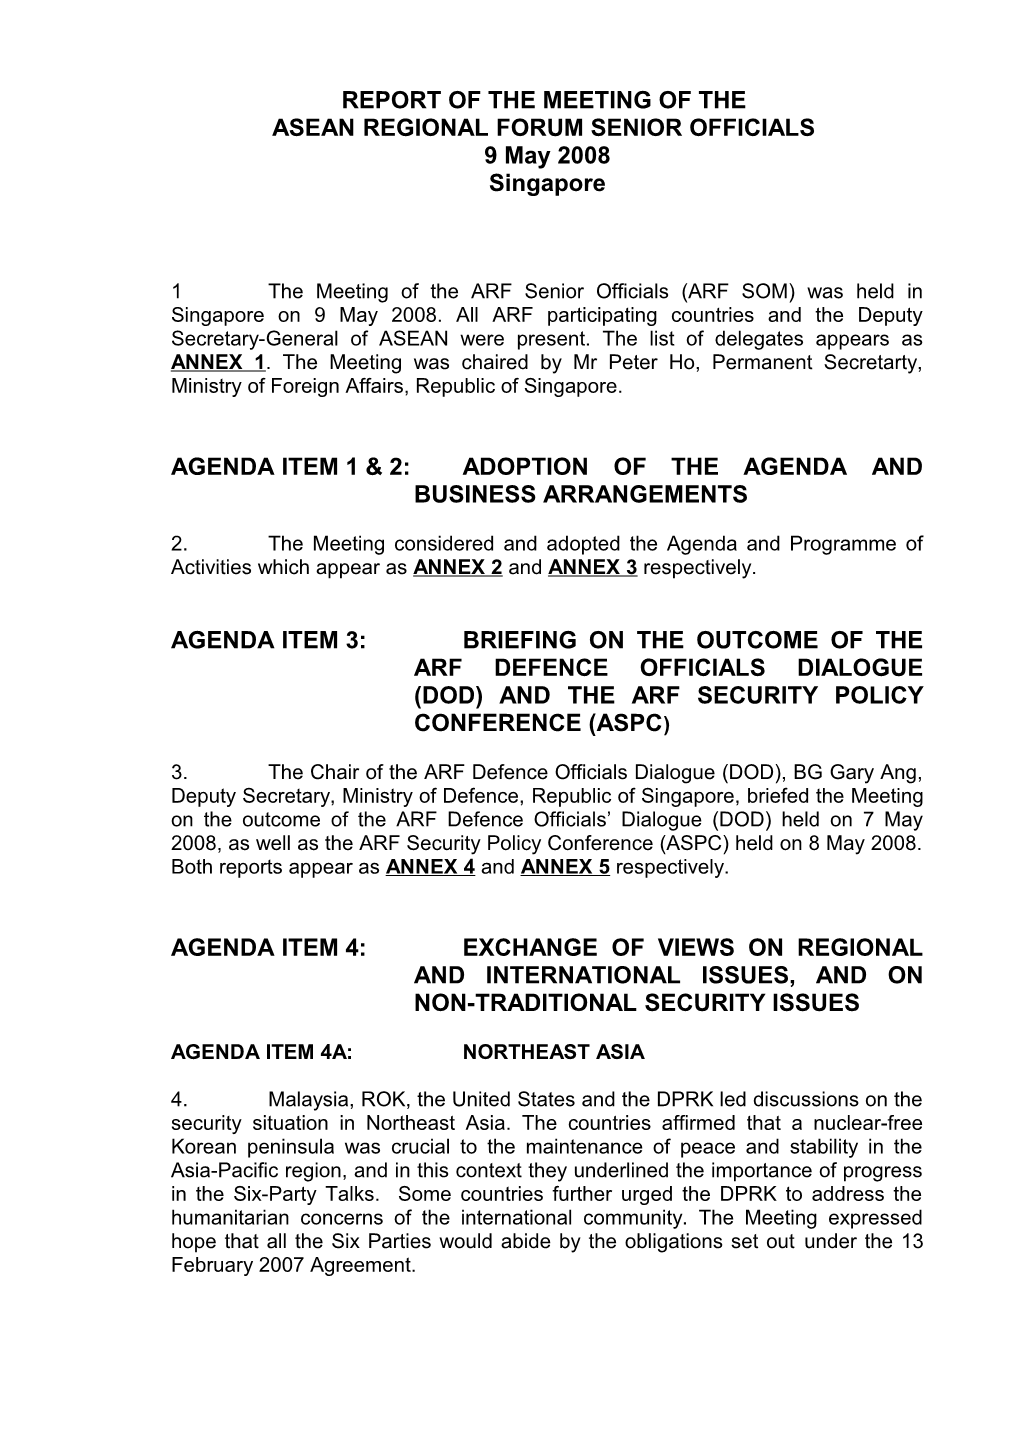 Agenda Item 1 & 2:Adoption of the Agenda and Business Arrangements